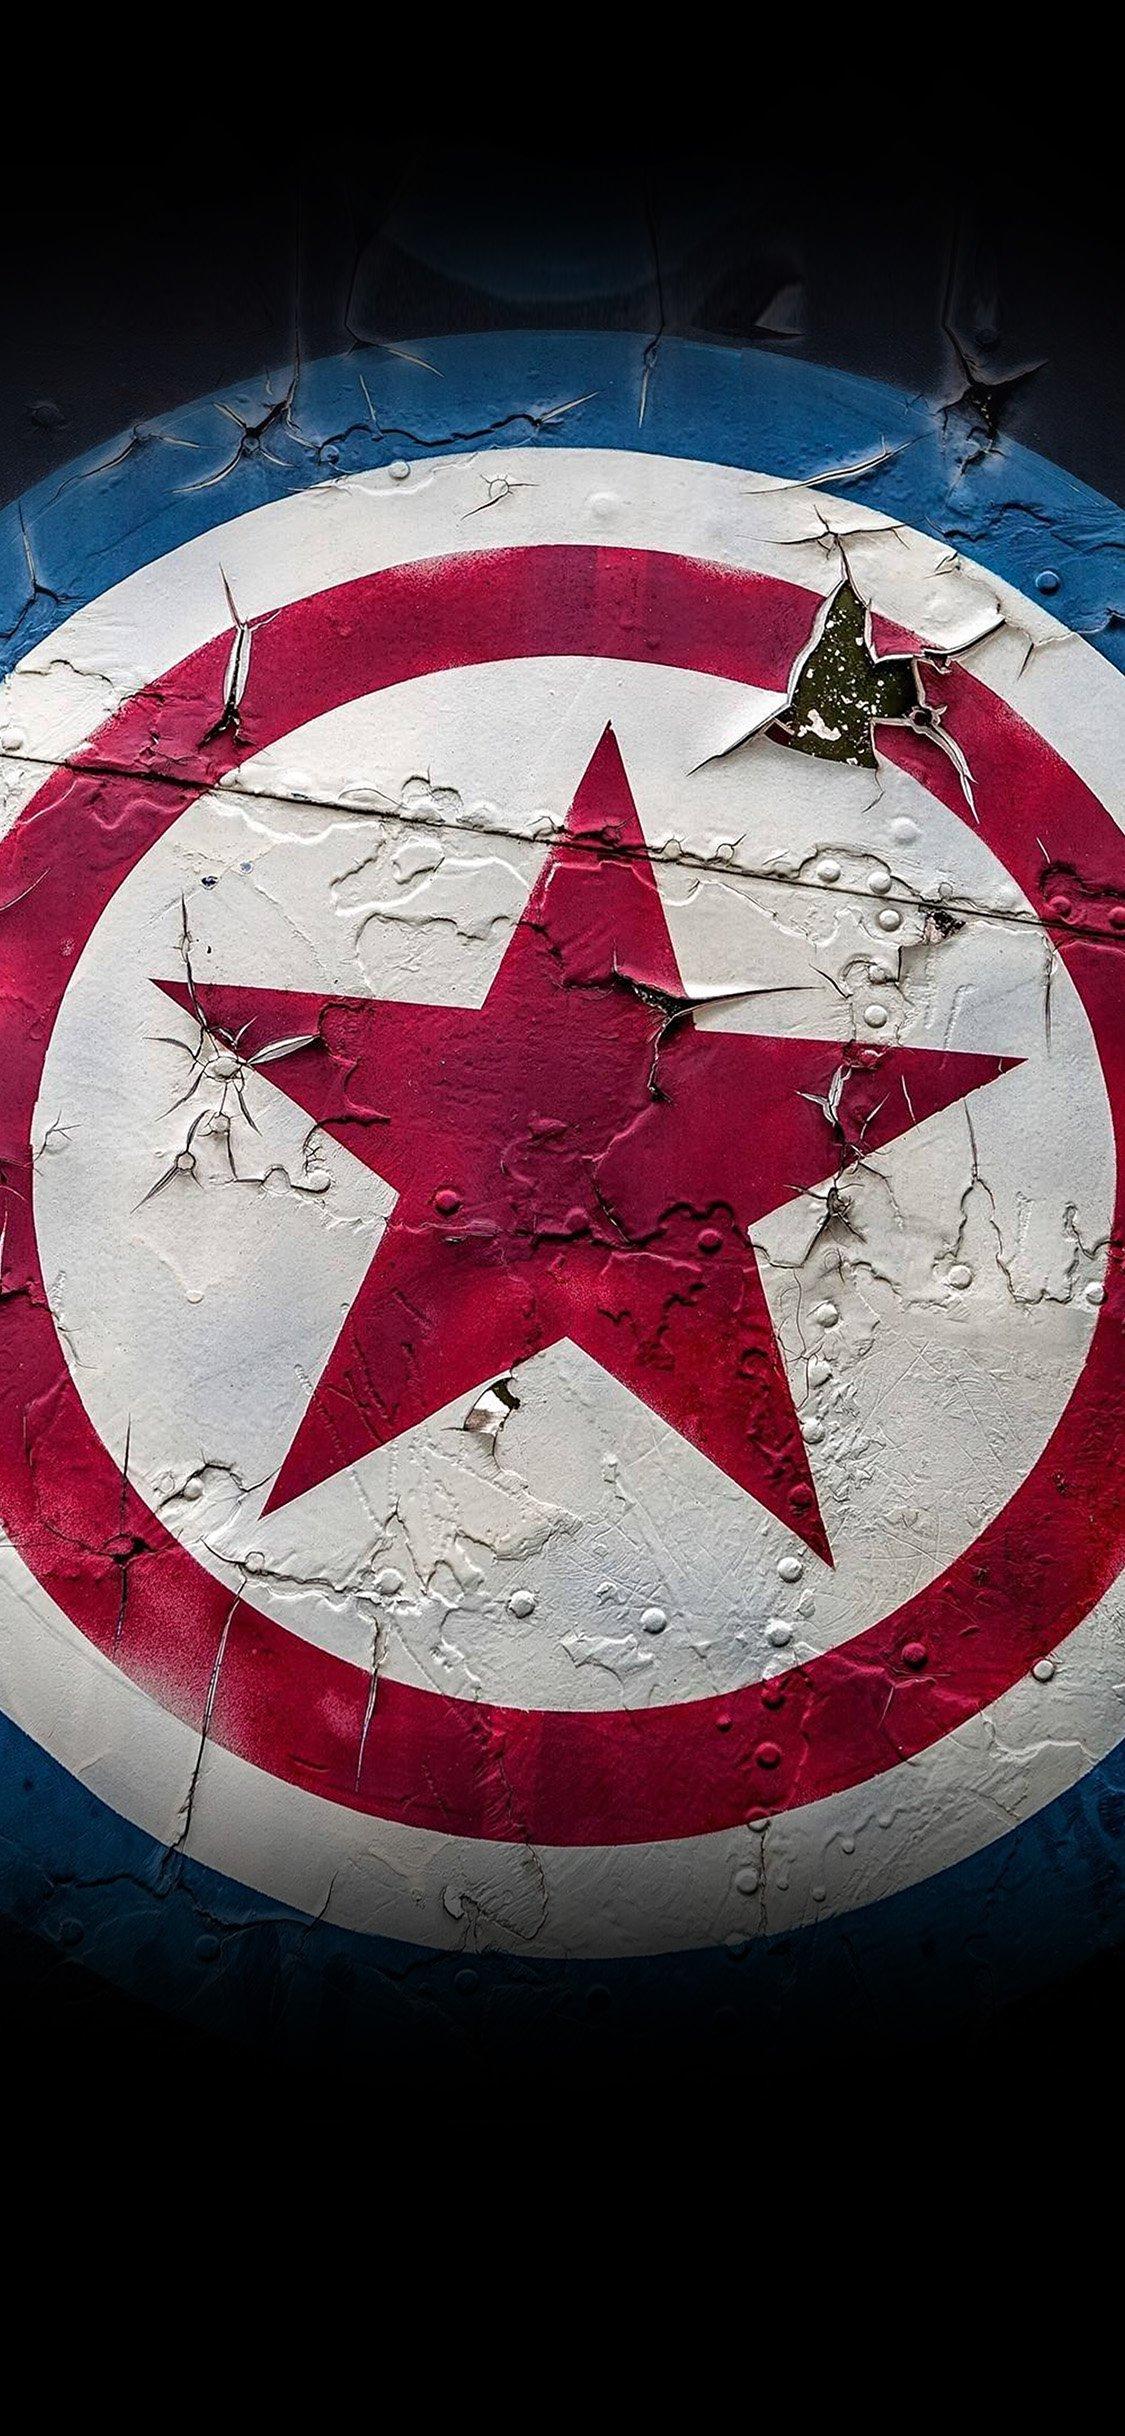 iPhone X wallpaper. captain america marvel hero disney art illustration